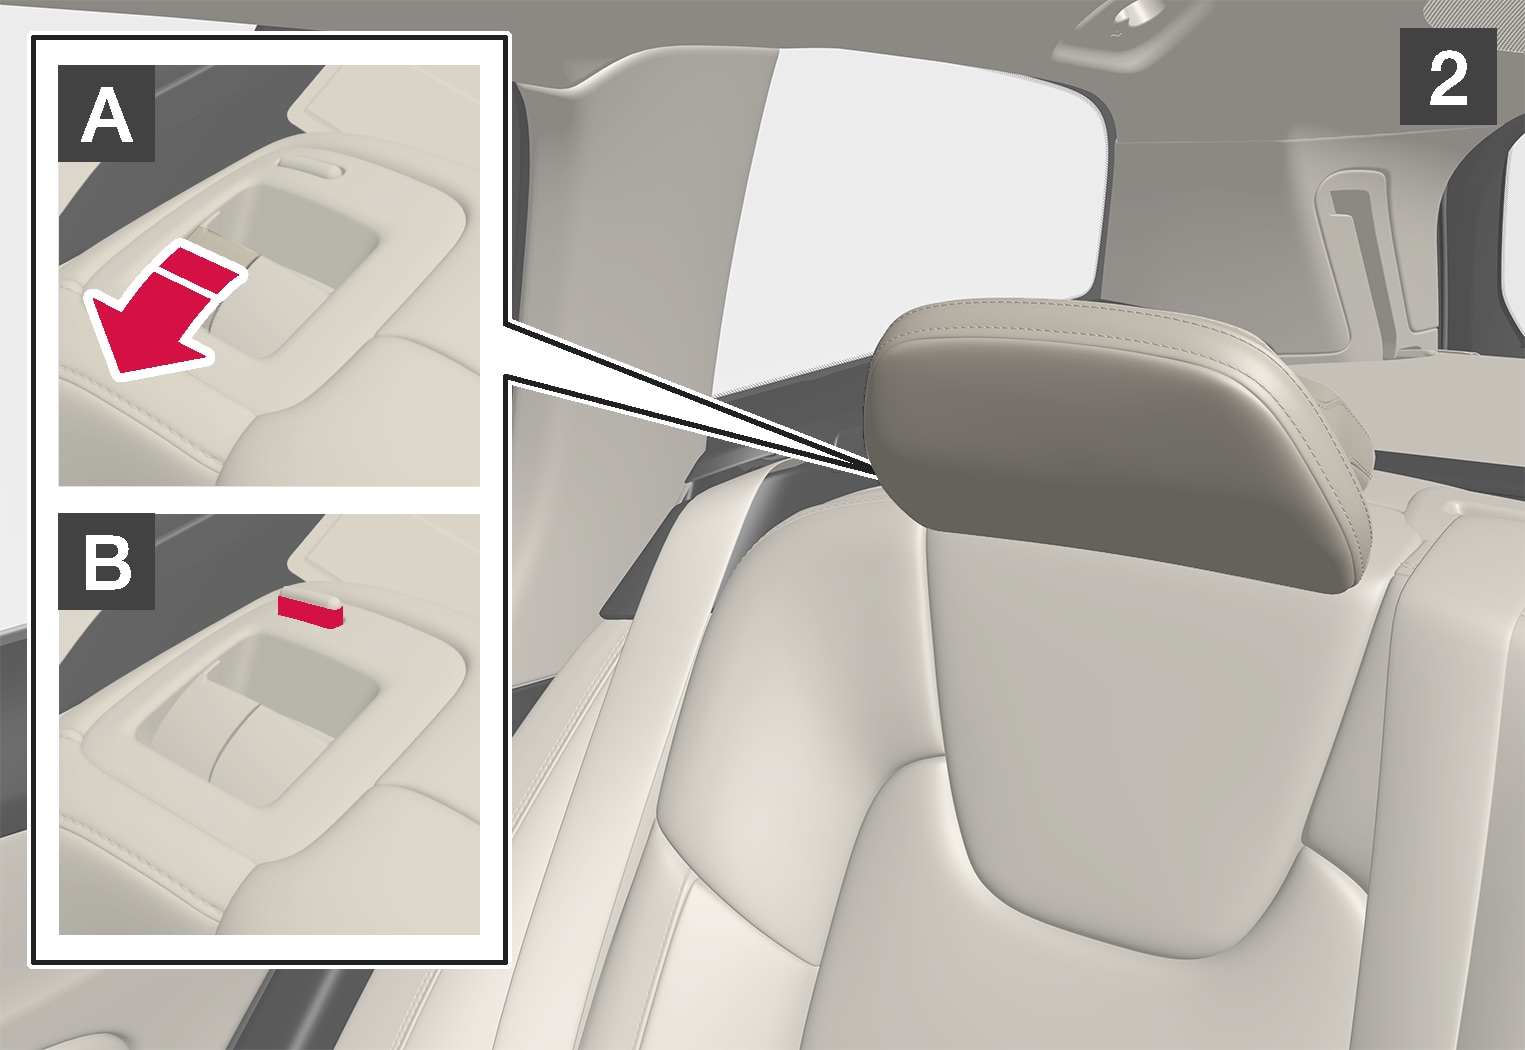 P5-1817-V60-Manual folding rear seat_image2of2